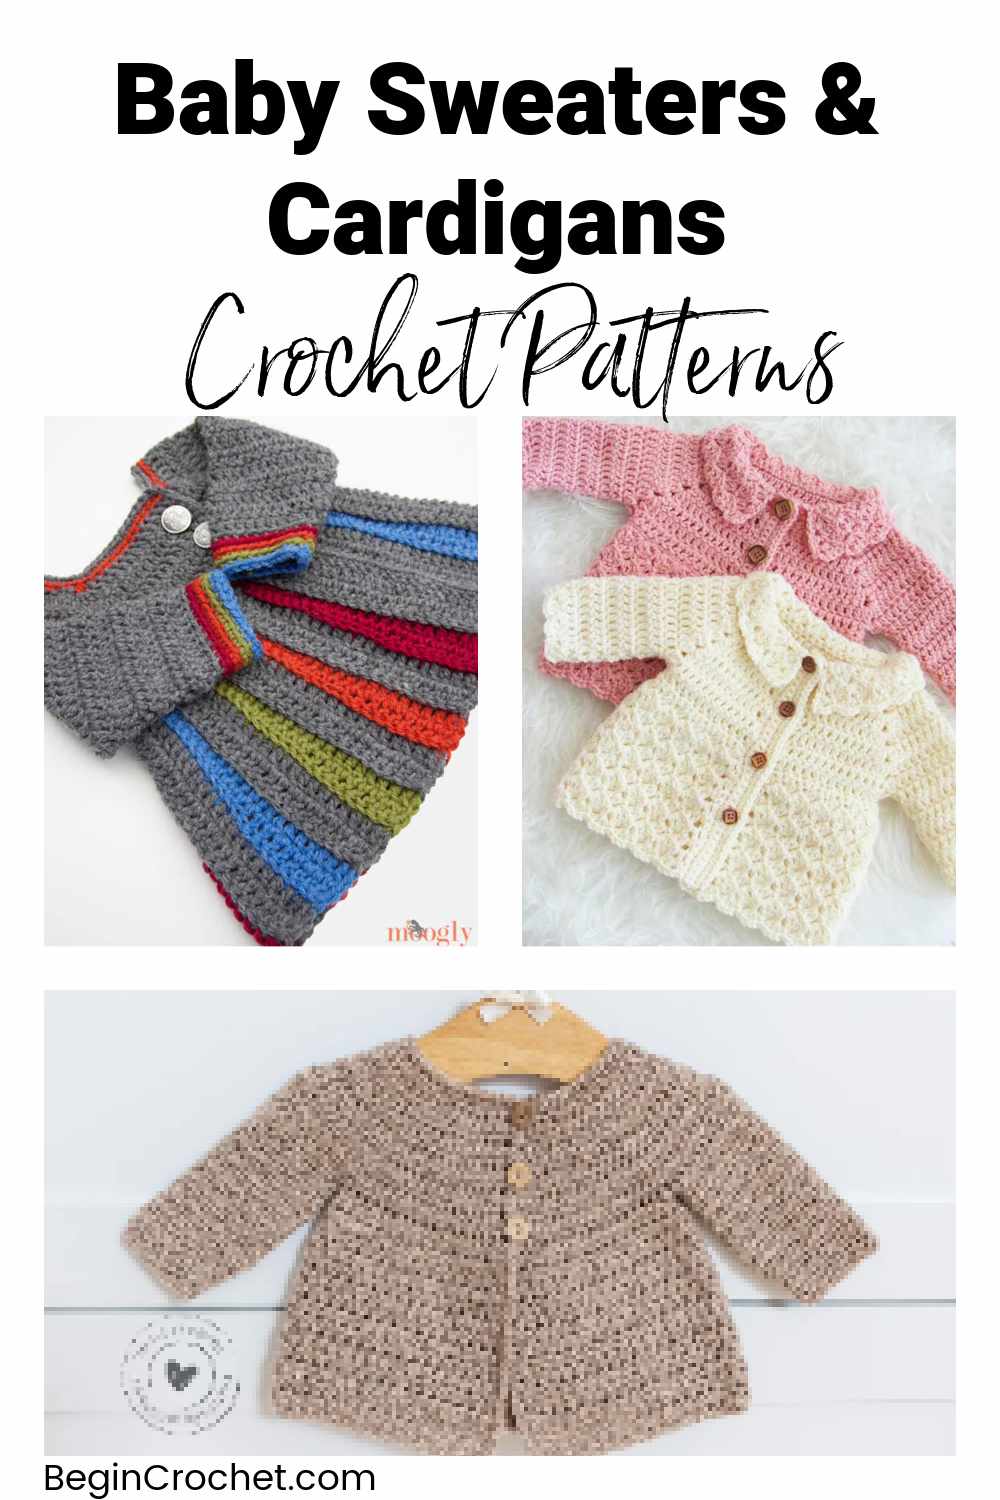 Crochet Baby Cardigan and Sweater Patterns (Free!) - Begin Crochet